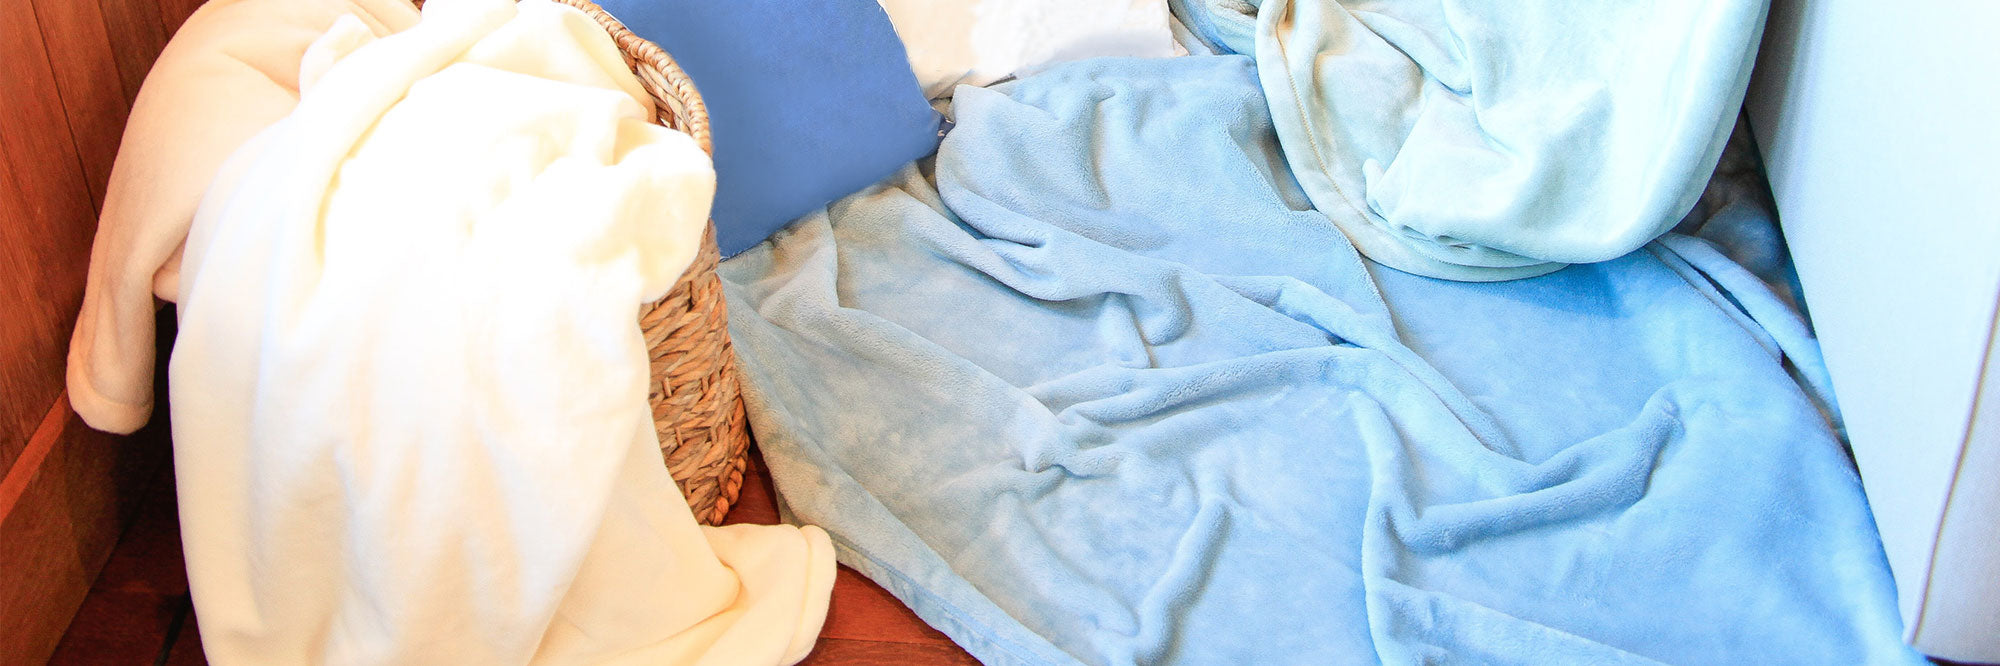 Fleece Blankets, Embracing Winter Warmth: The Soothing Comfort and Warmth of Fleece Blankets